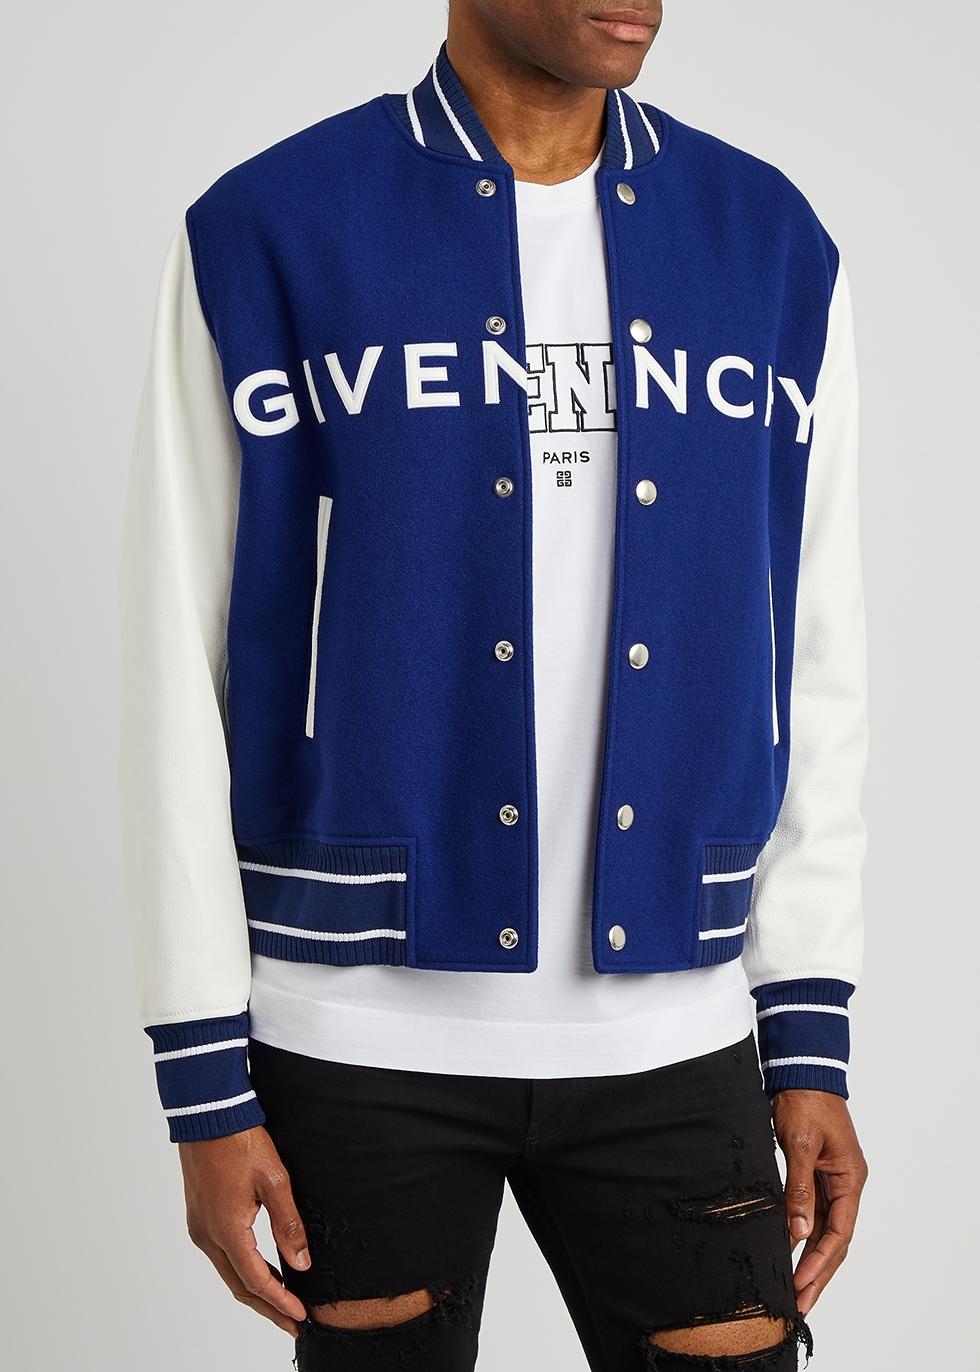 Givenchy Blue Logo Wool-blend Varsity Jacket for Men | Lyst